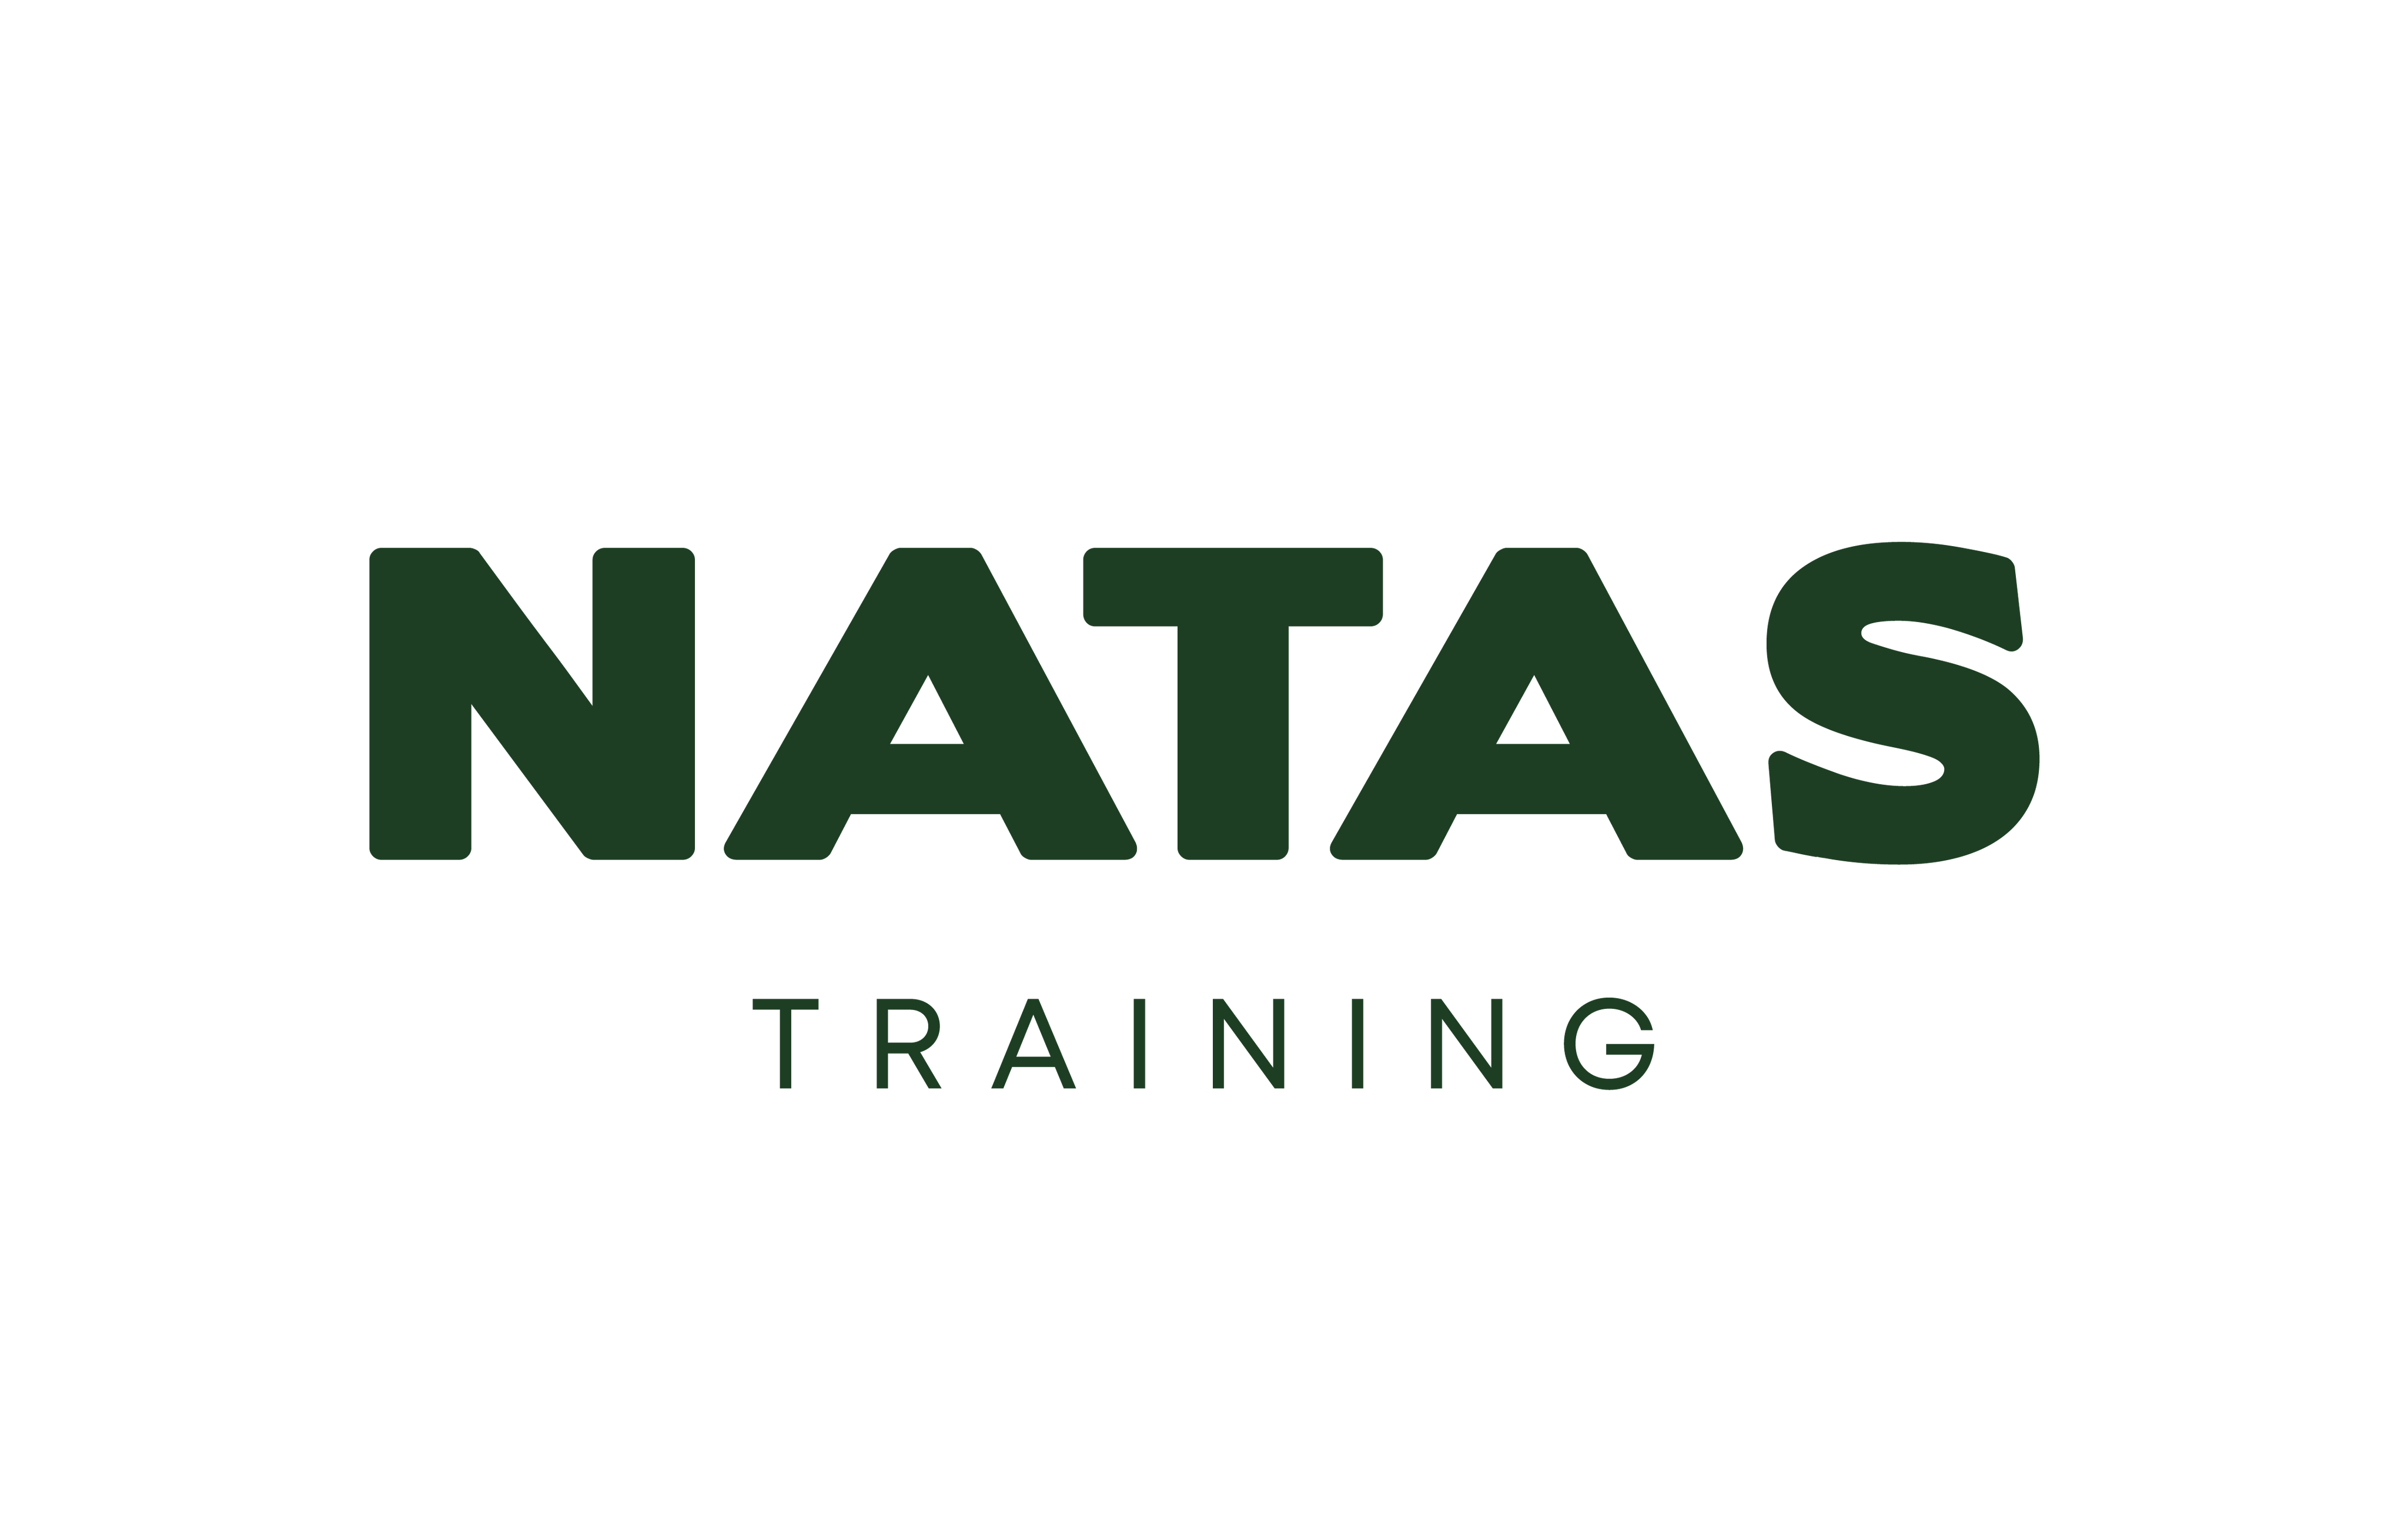 NATAS Silica Dust Awareness course